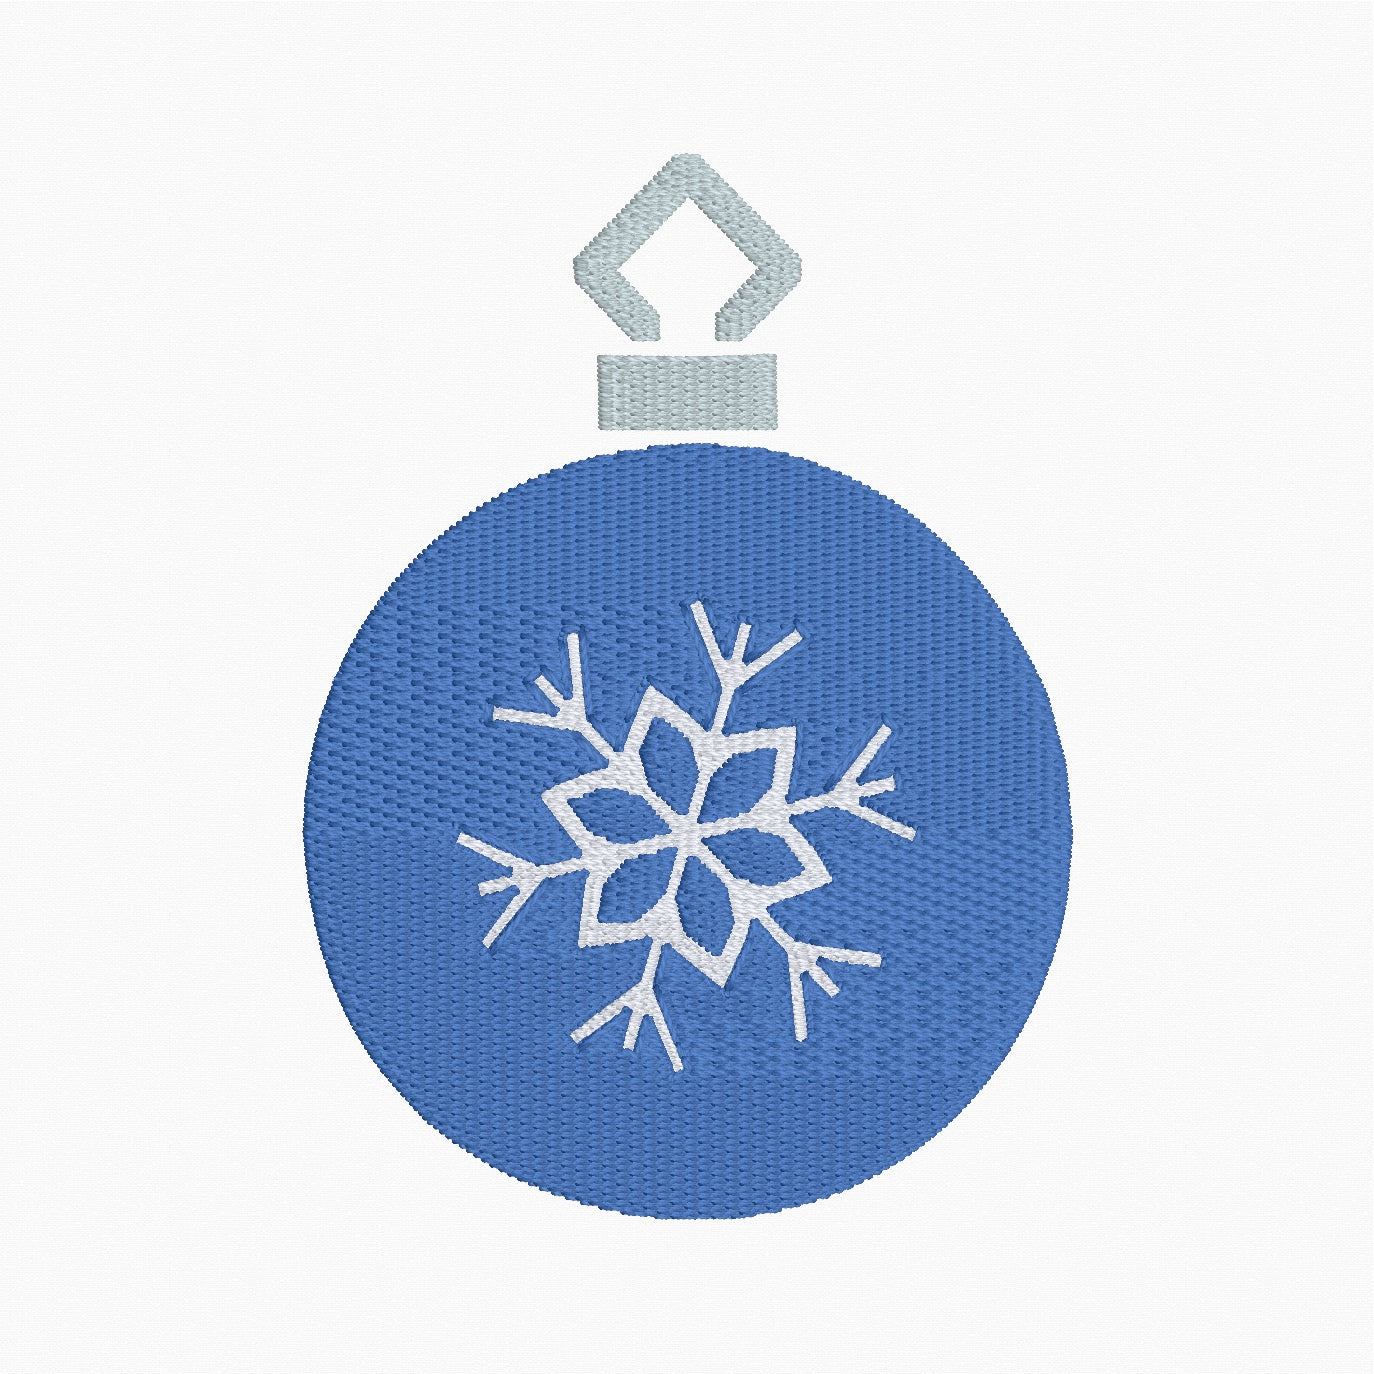 Snowflake Christmas Ornament - Machine Embroidery Design - 4x4 Hoop